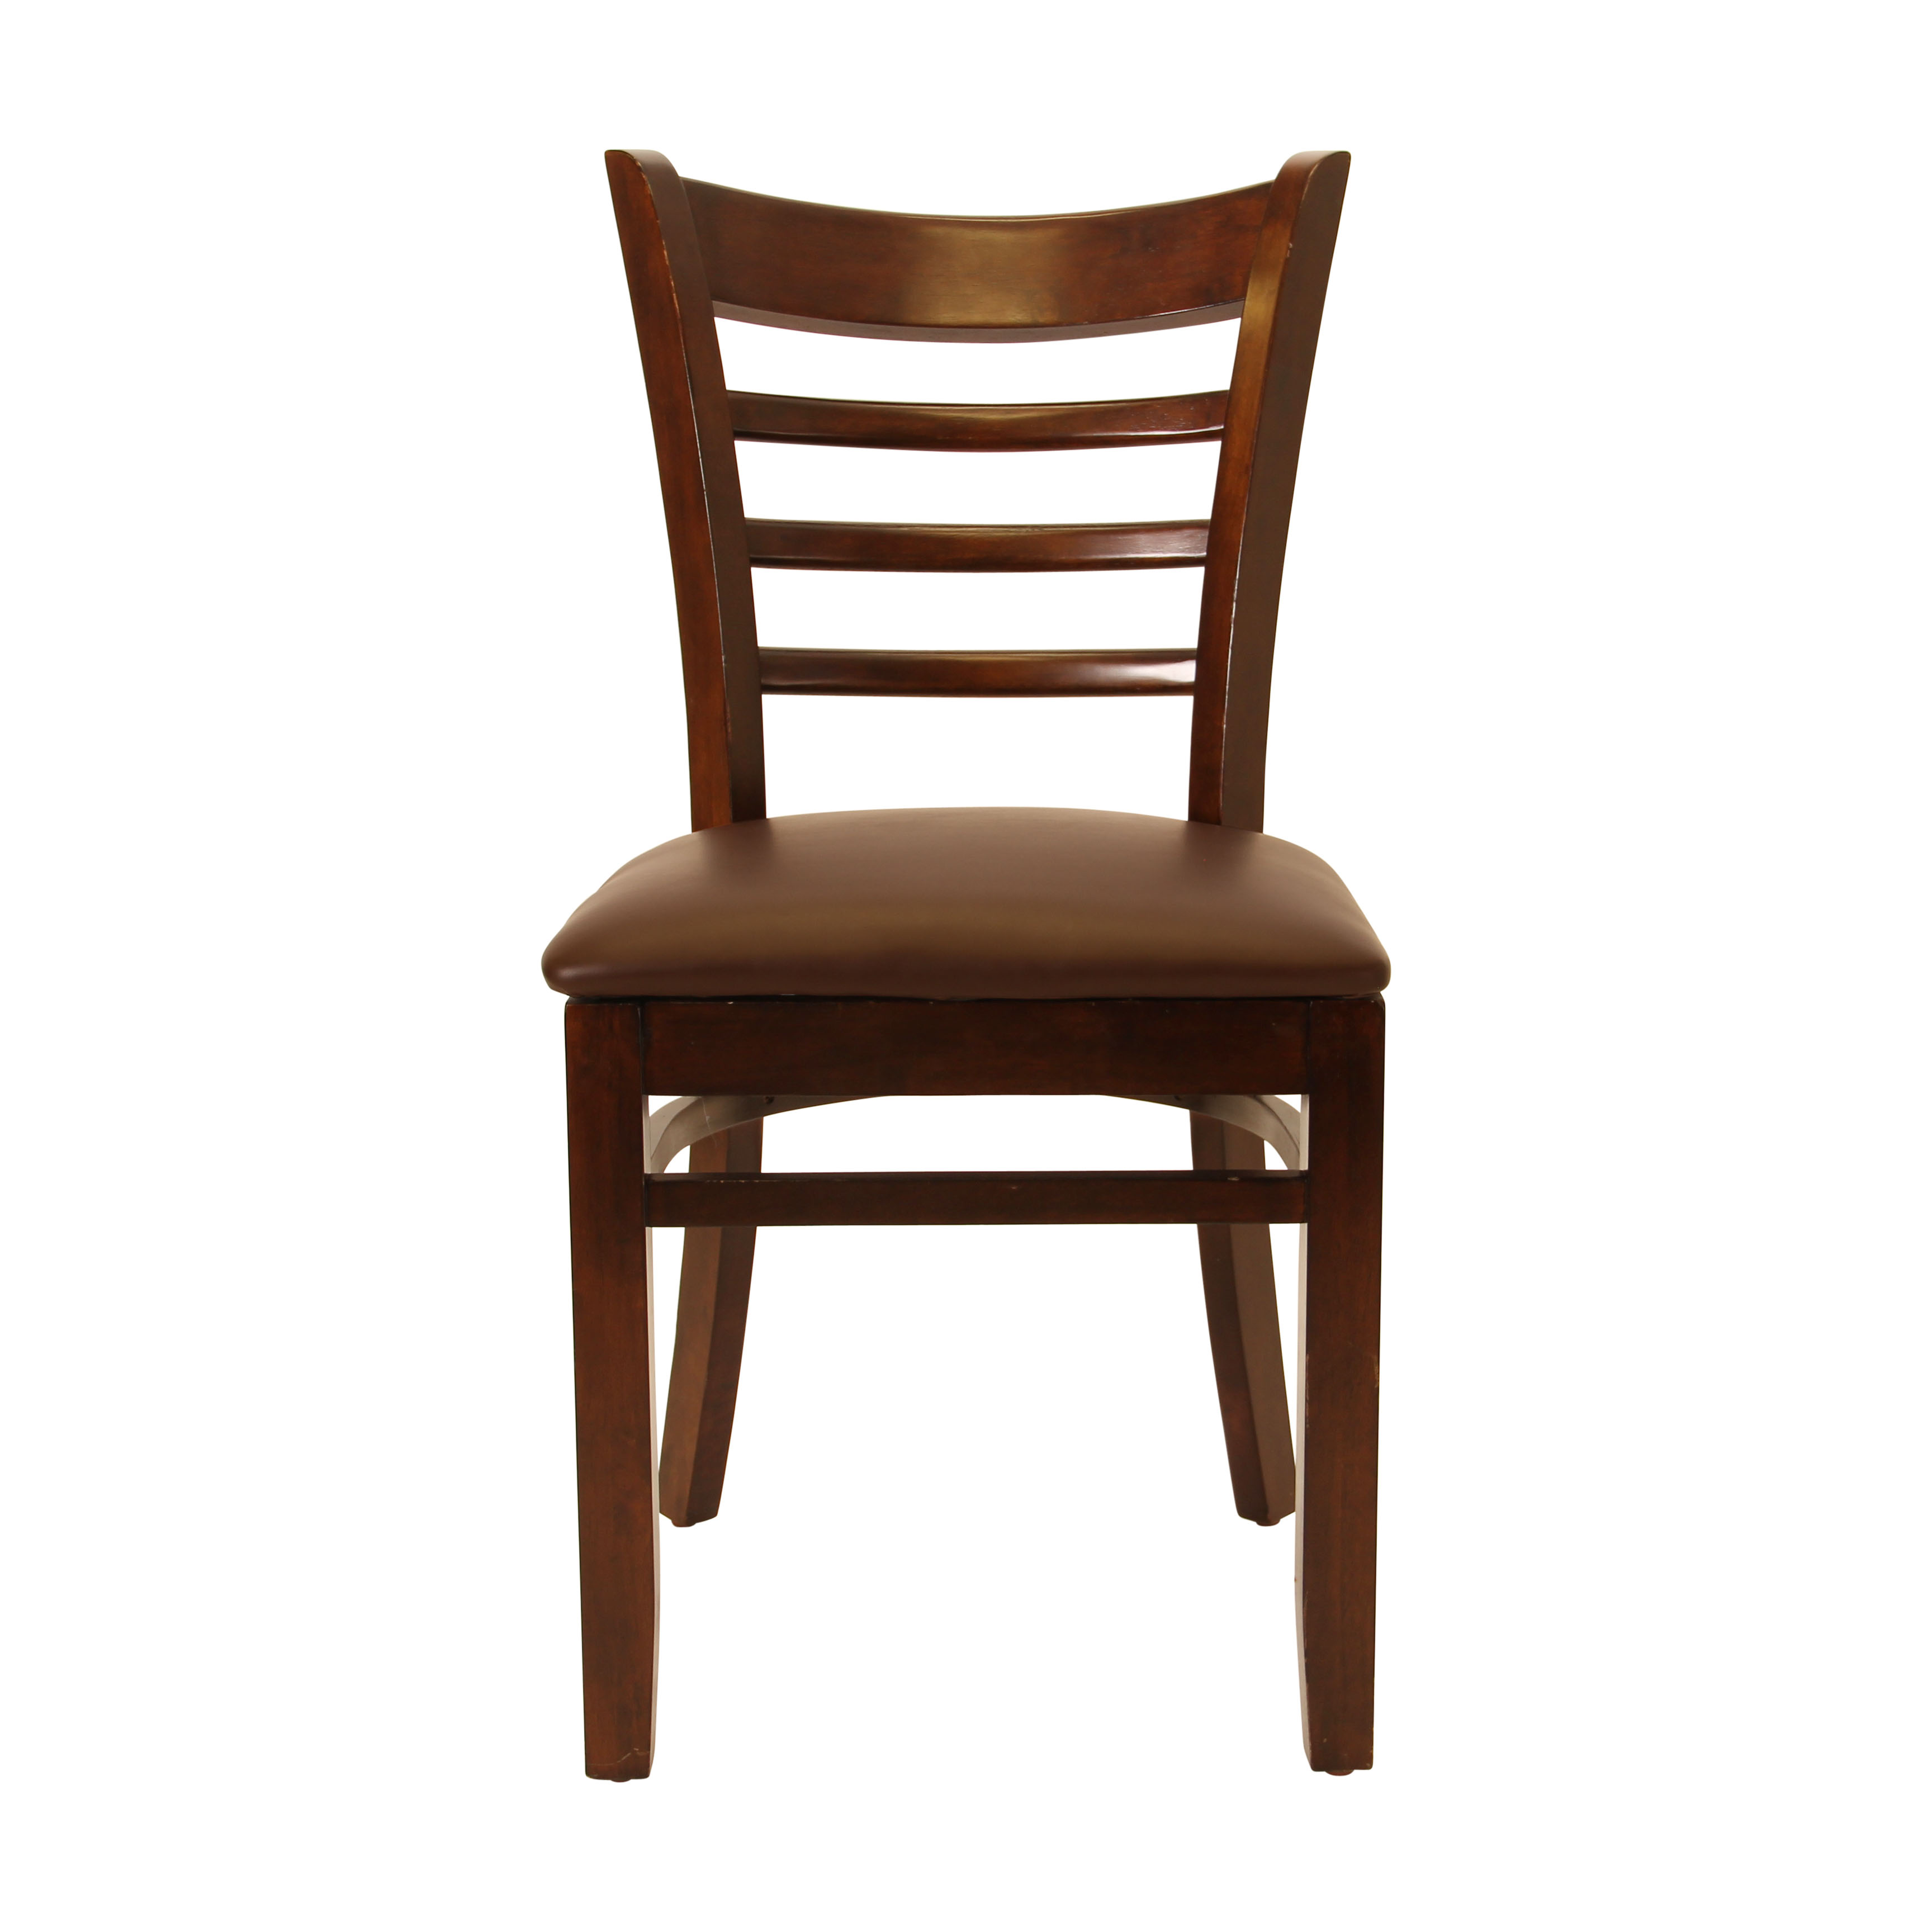 Ladder Back Chair with Chocolate Cushion in Dark Walnut